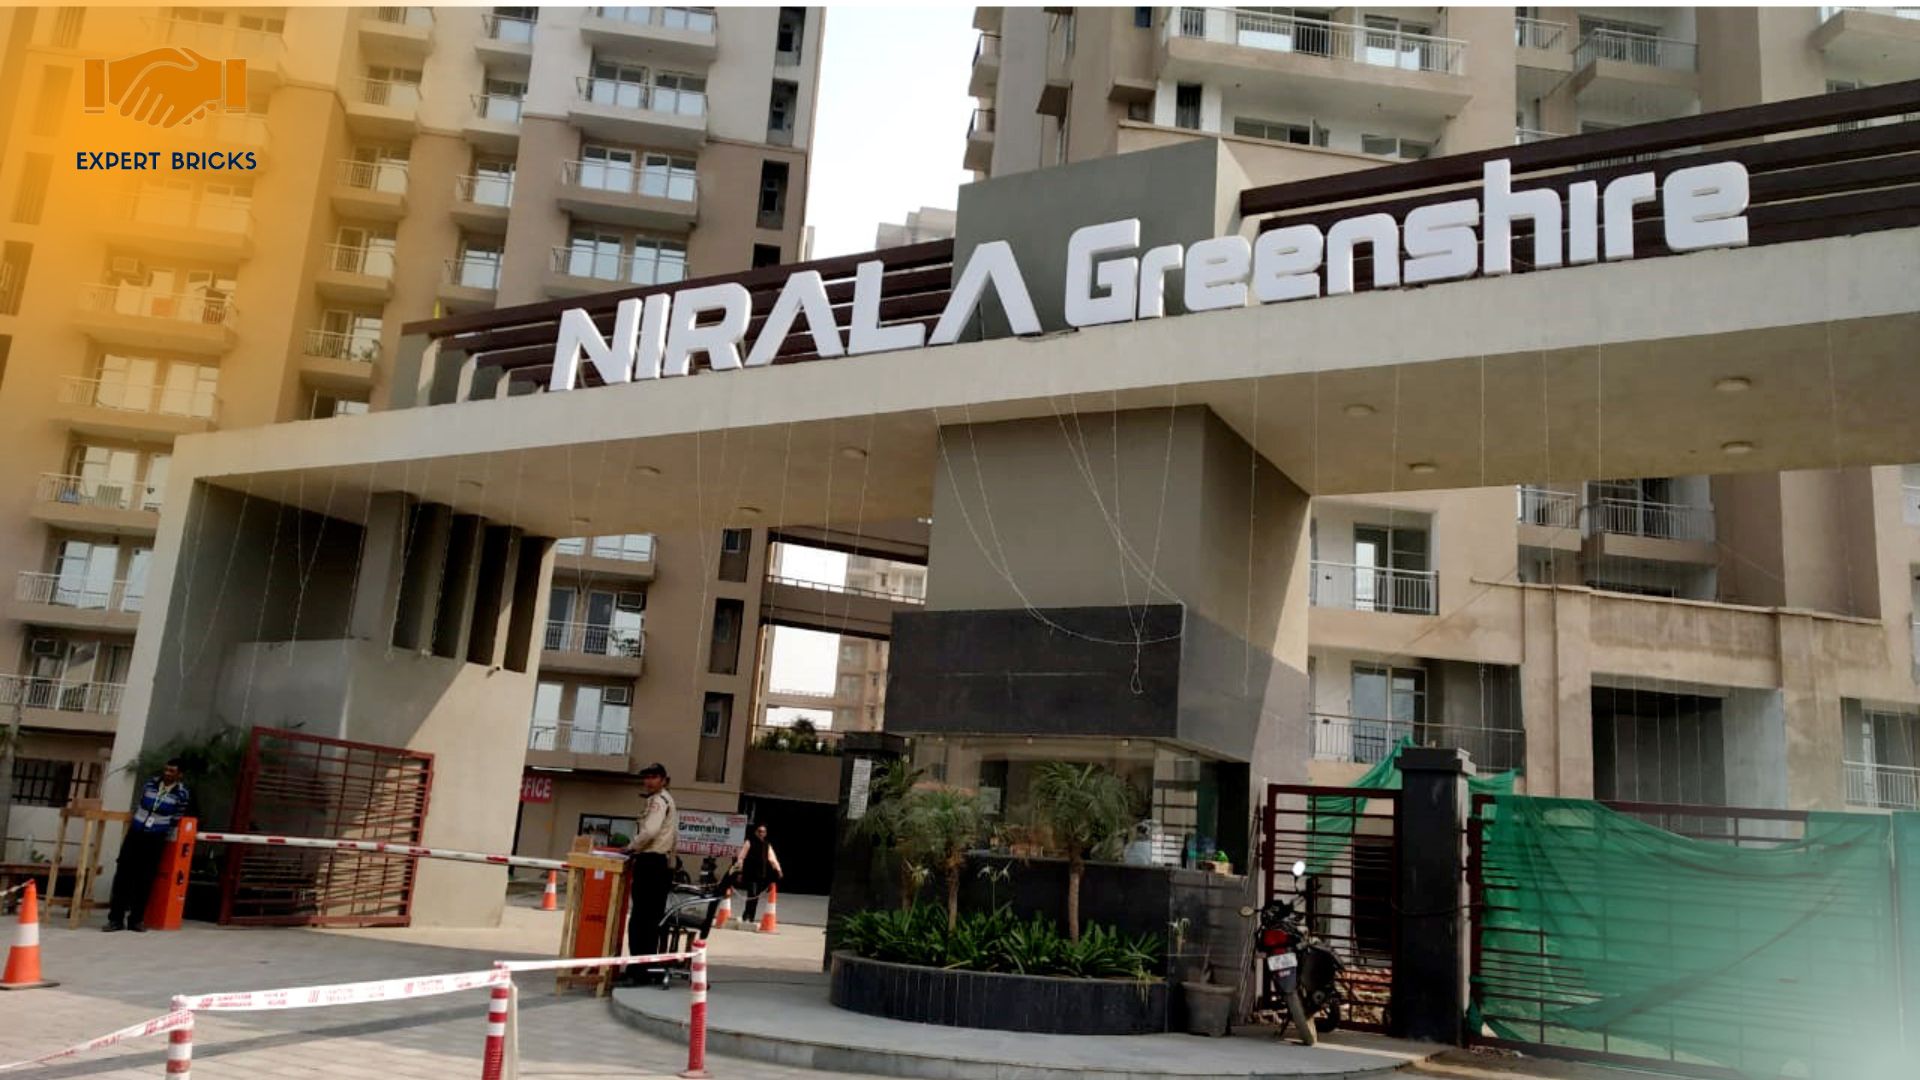 Nirala GreenShire in noida extension Entry Gate